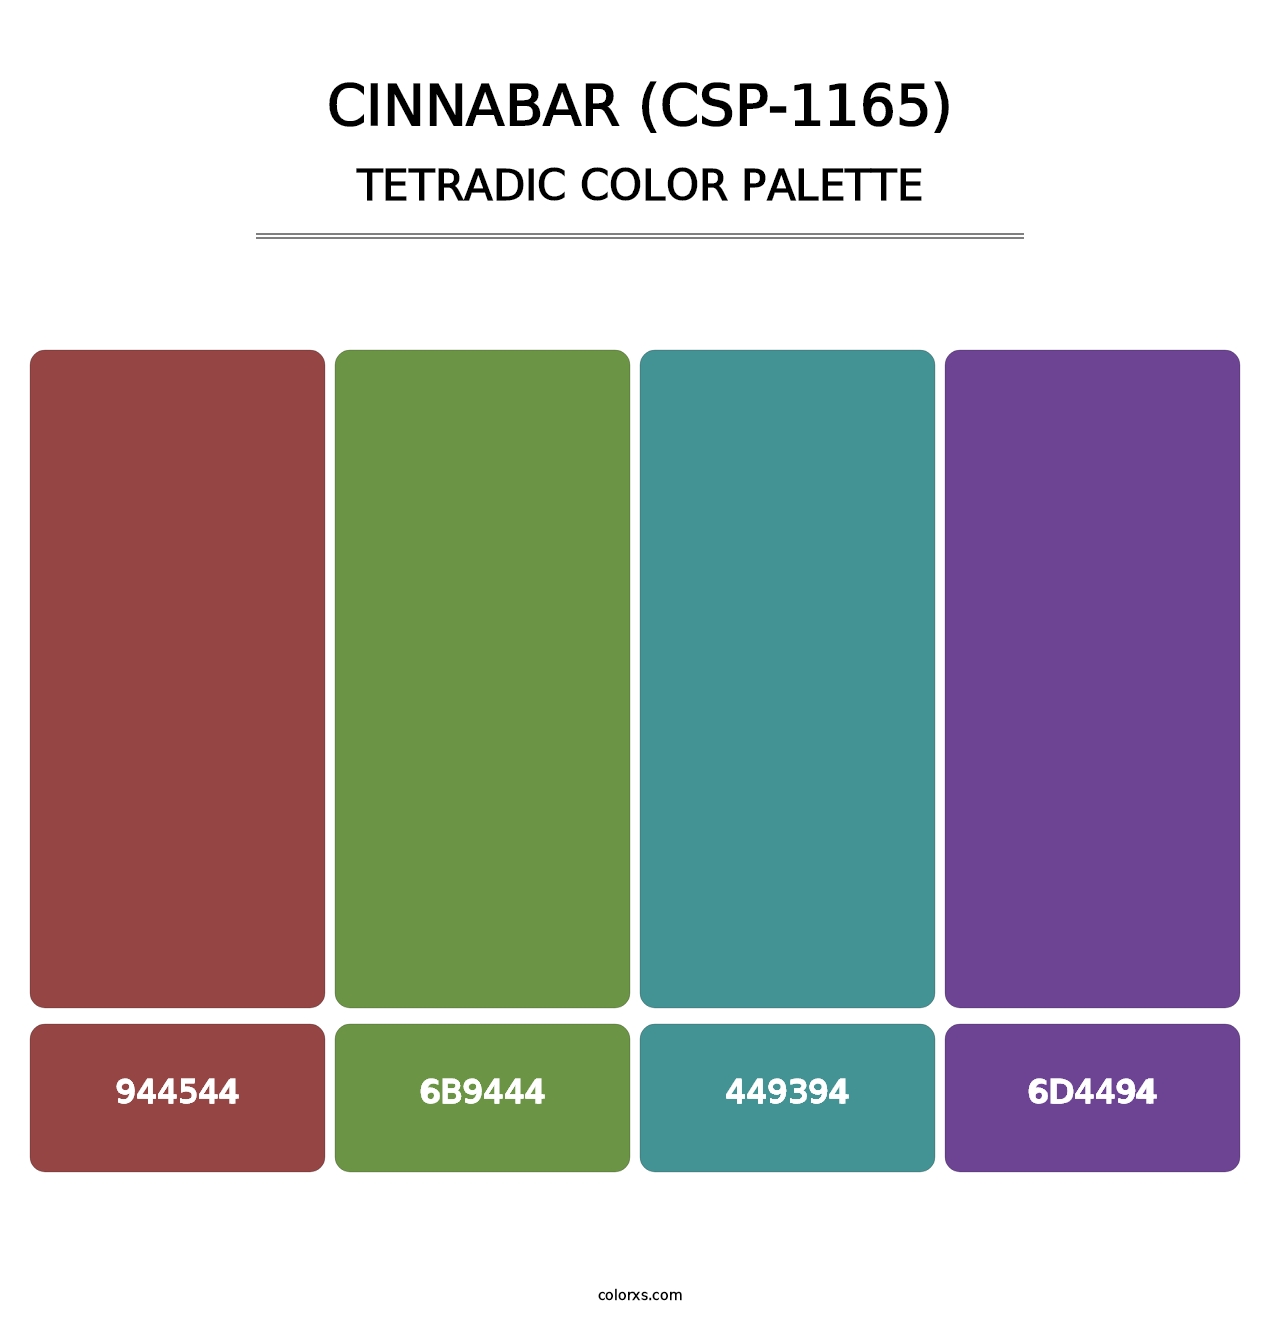 Cinnabar (CSP-1165) - Tetradic Color Palette